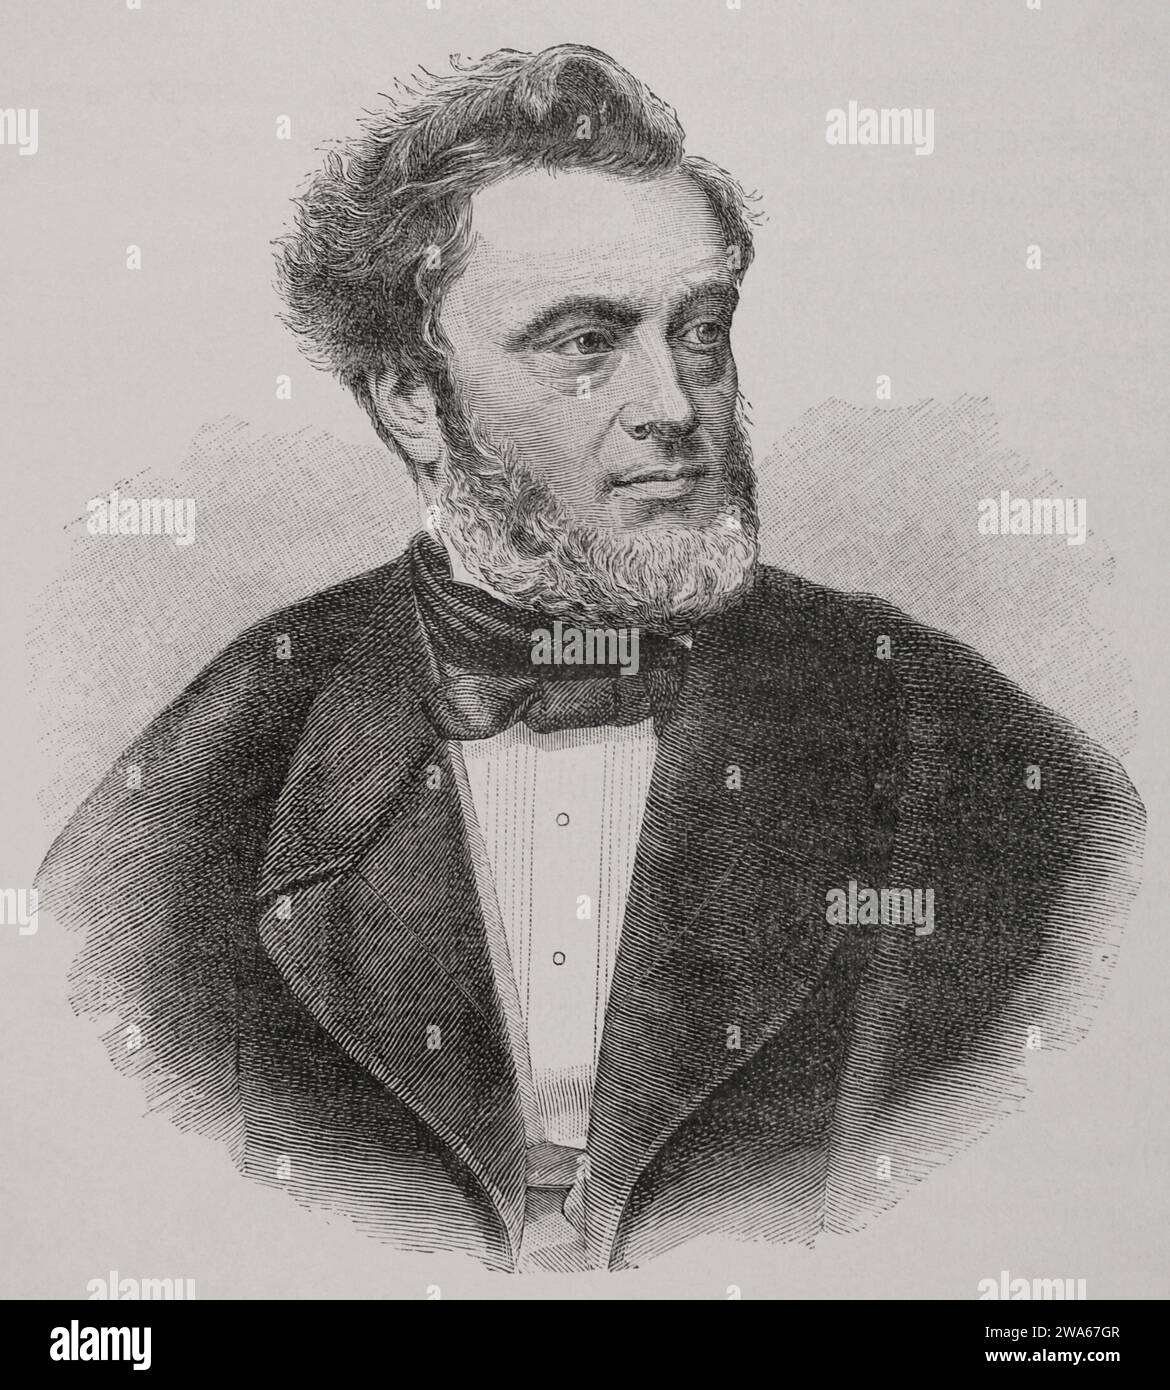 Jules Favre (1809-1880). French republican politician. Portrait. Engraving. 'Historia de la Guerra Franco-Alemana de 1870-1871'. Published in Barcelona, 1891. Stock Photo